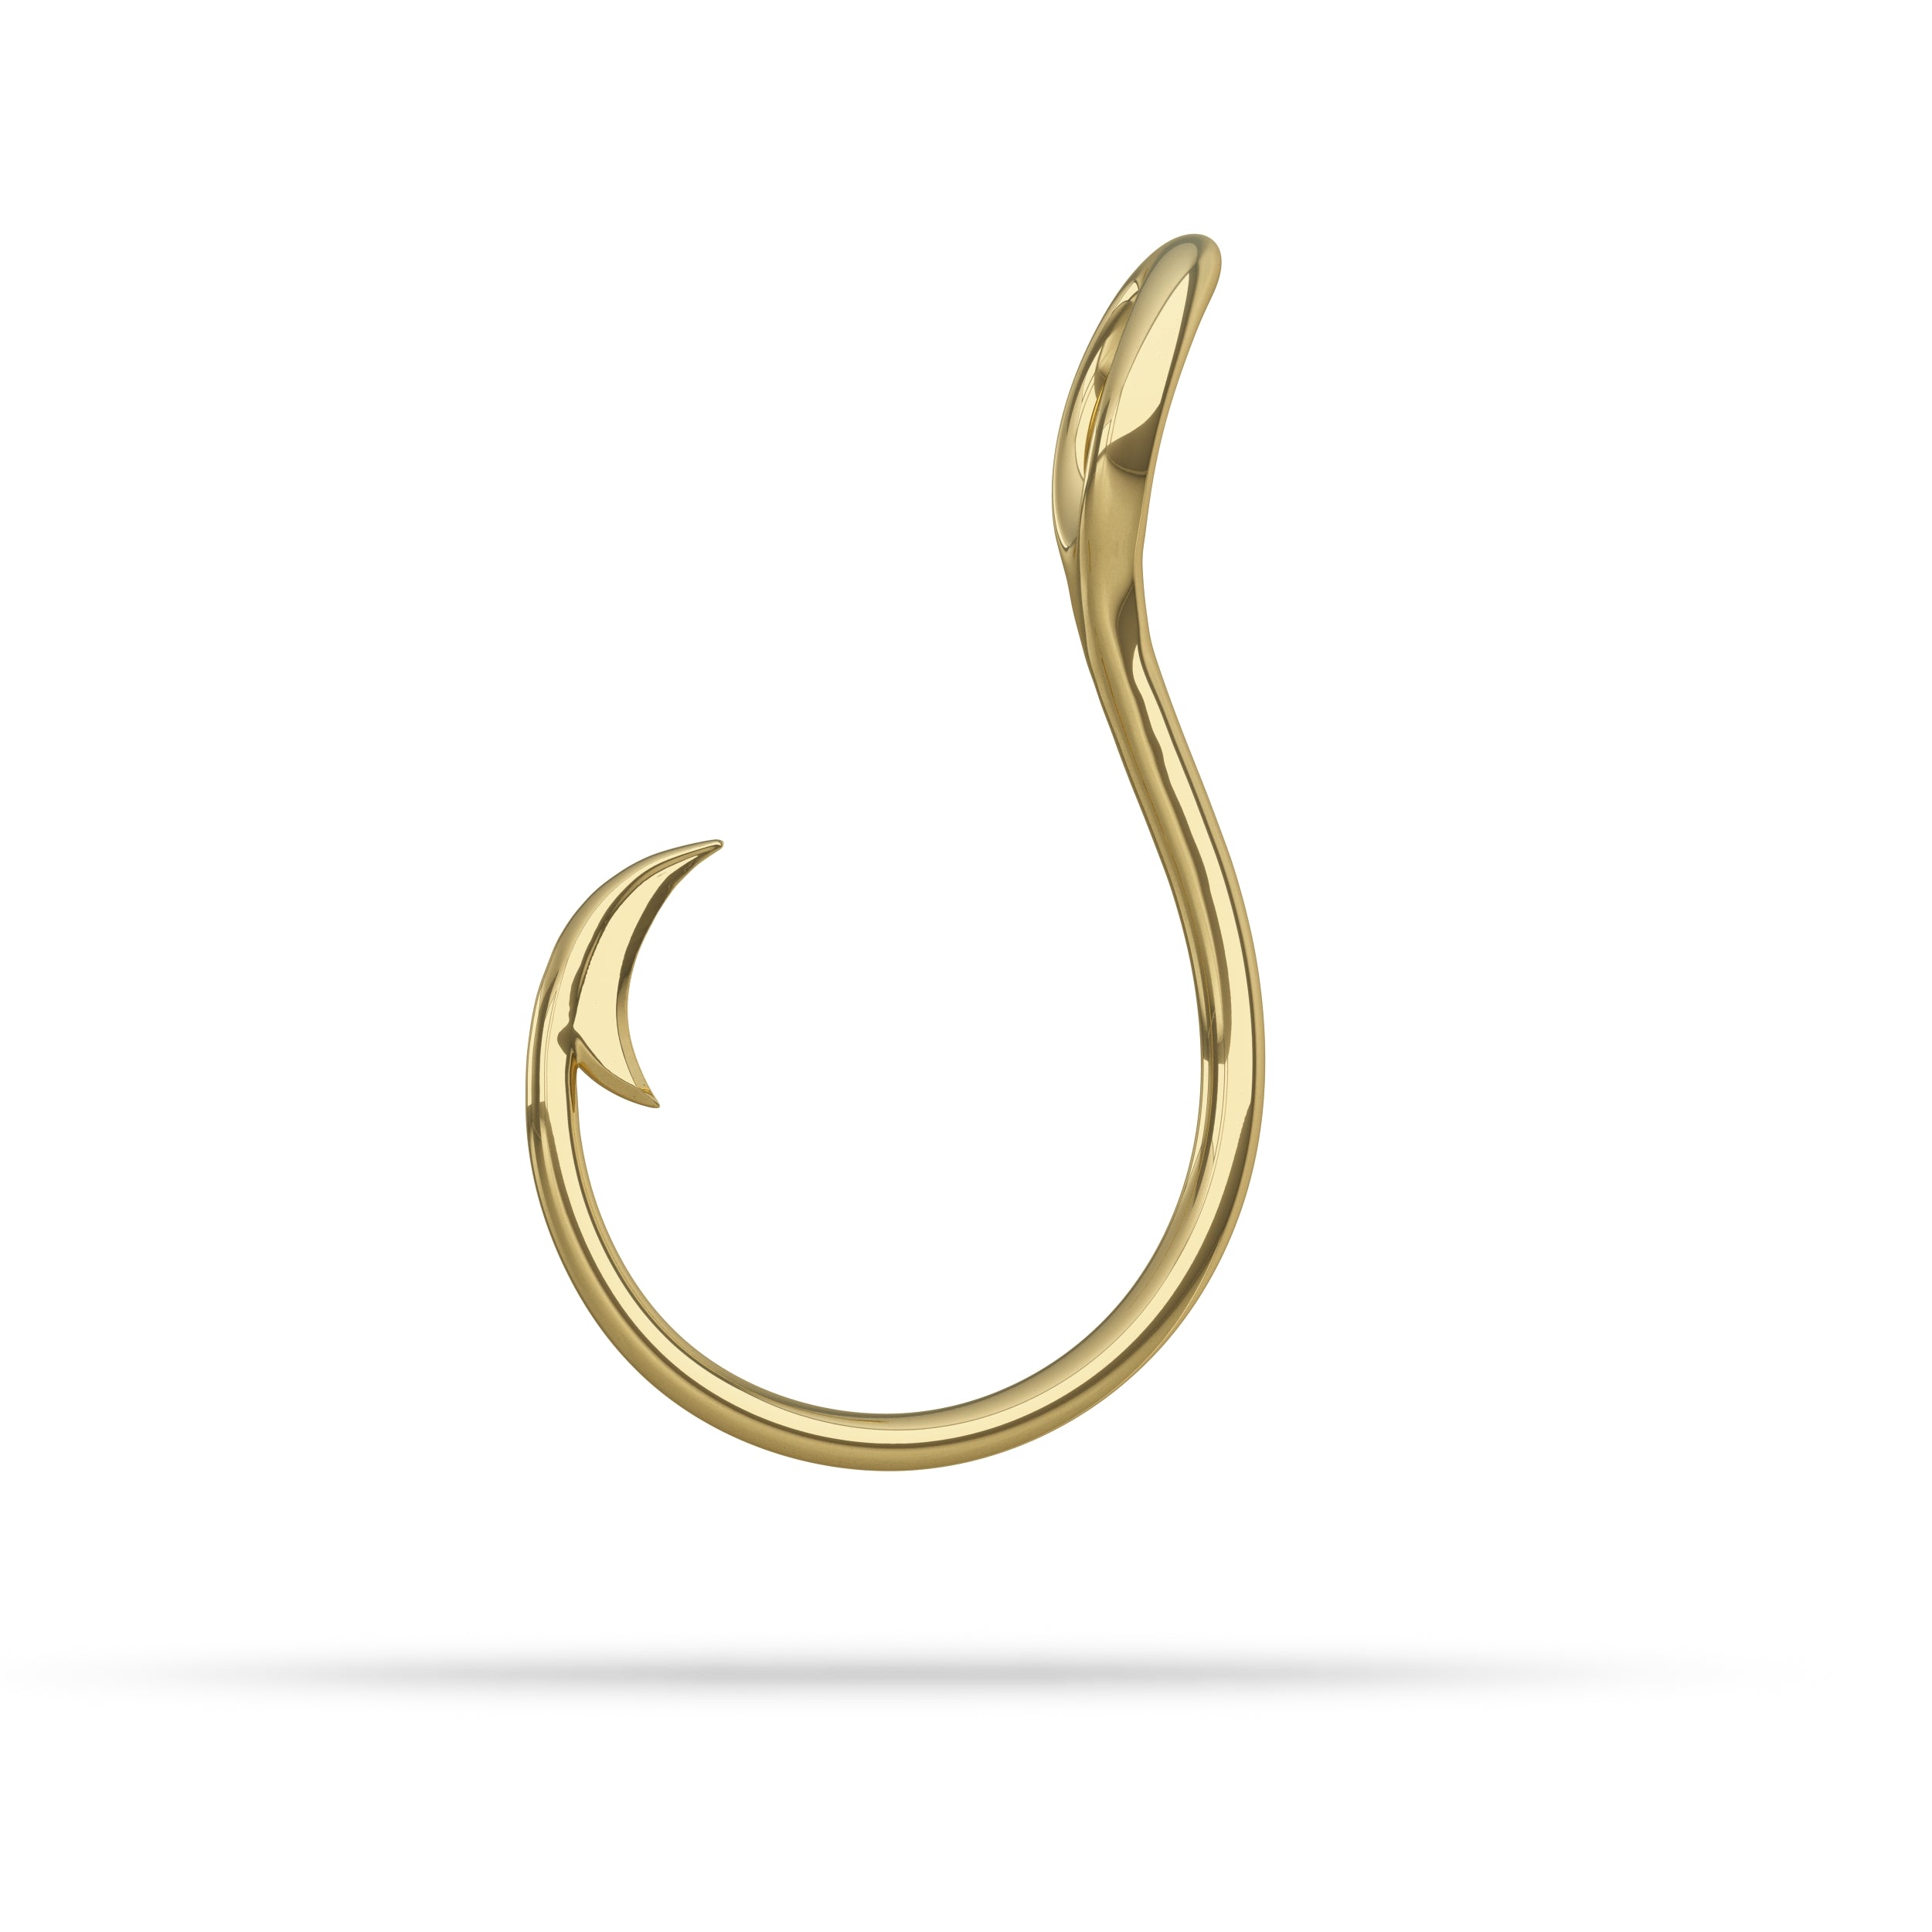 Large Gold fishing circle hook pendant by Nautical Treasure